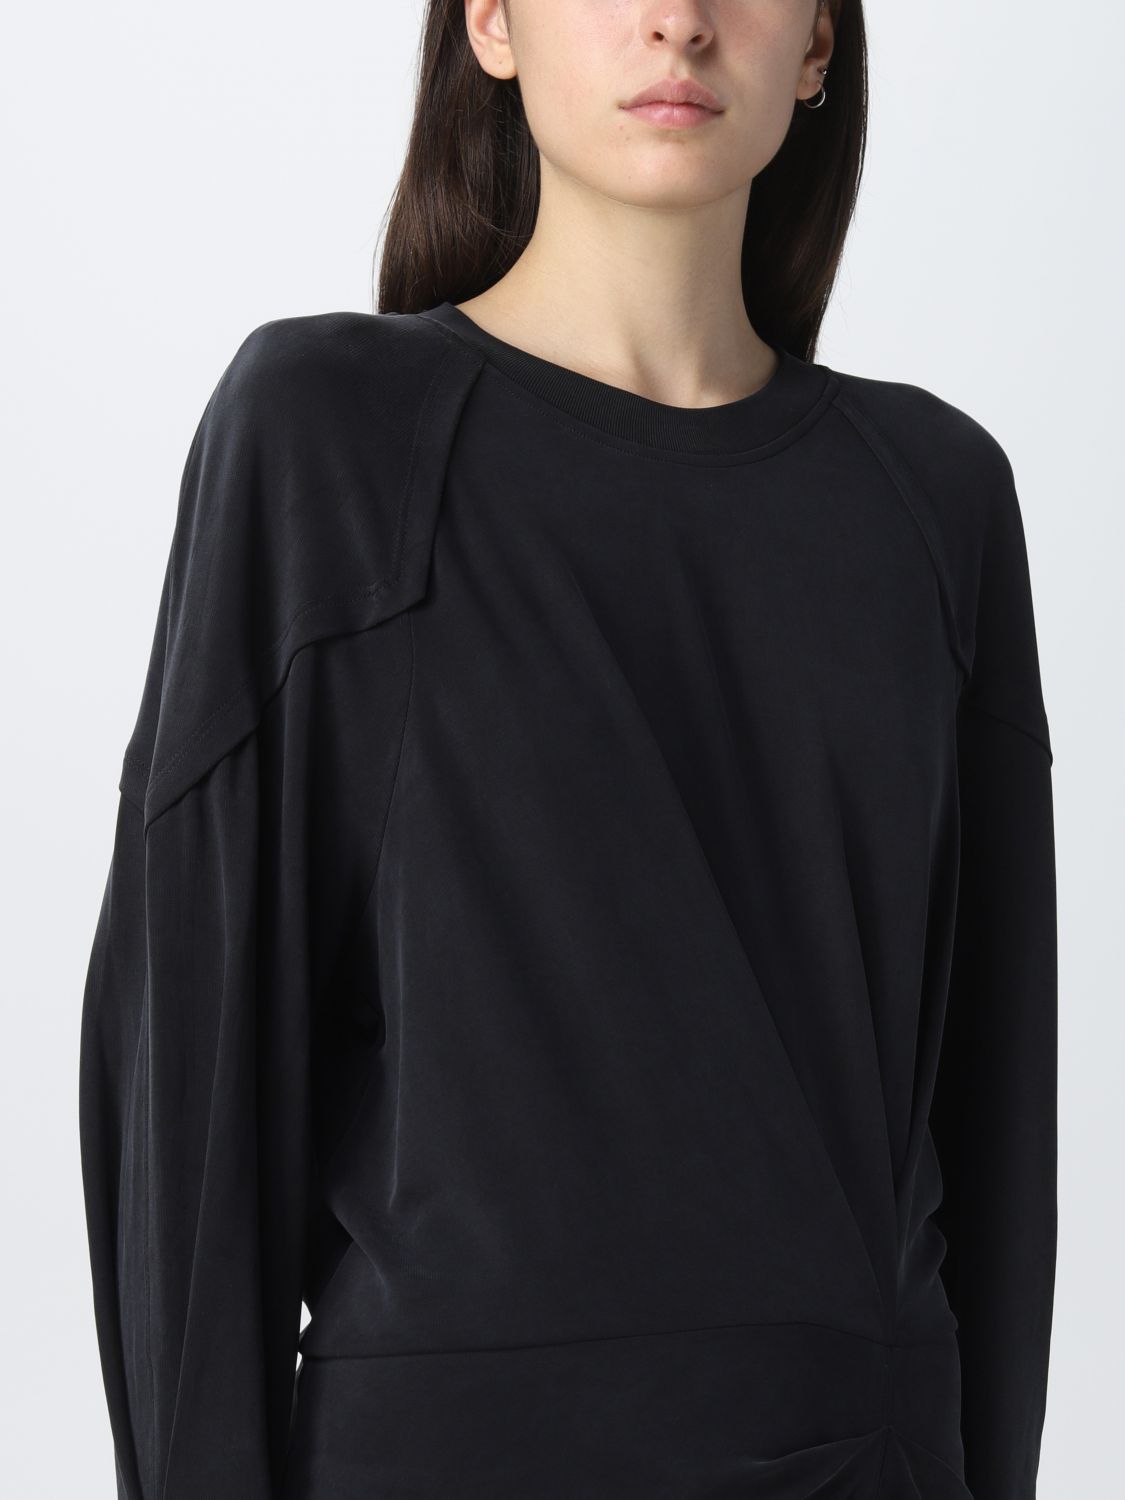 Dress Iro: Iro dress for woman black 3